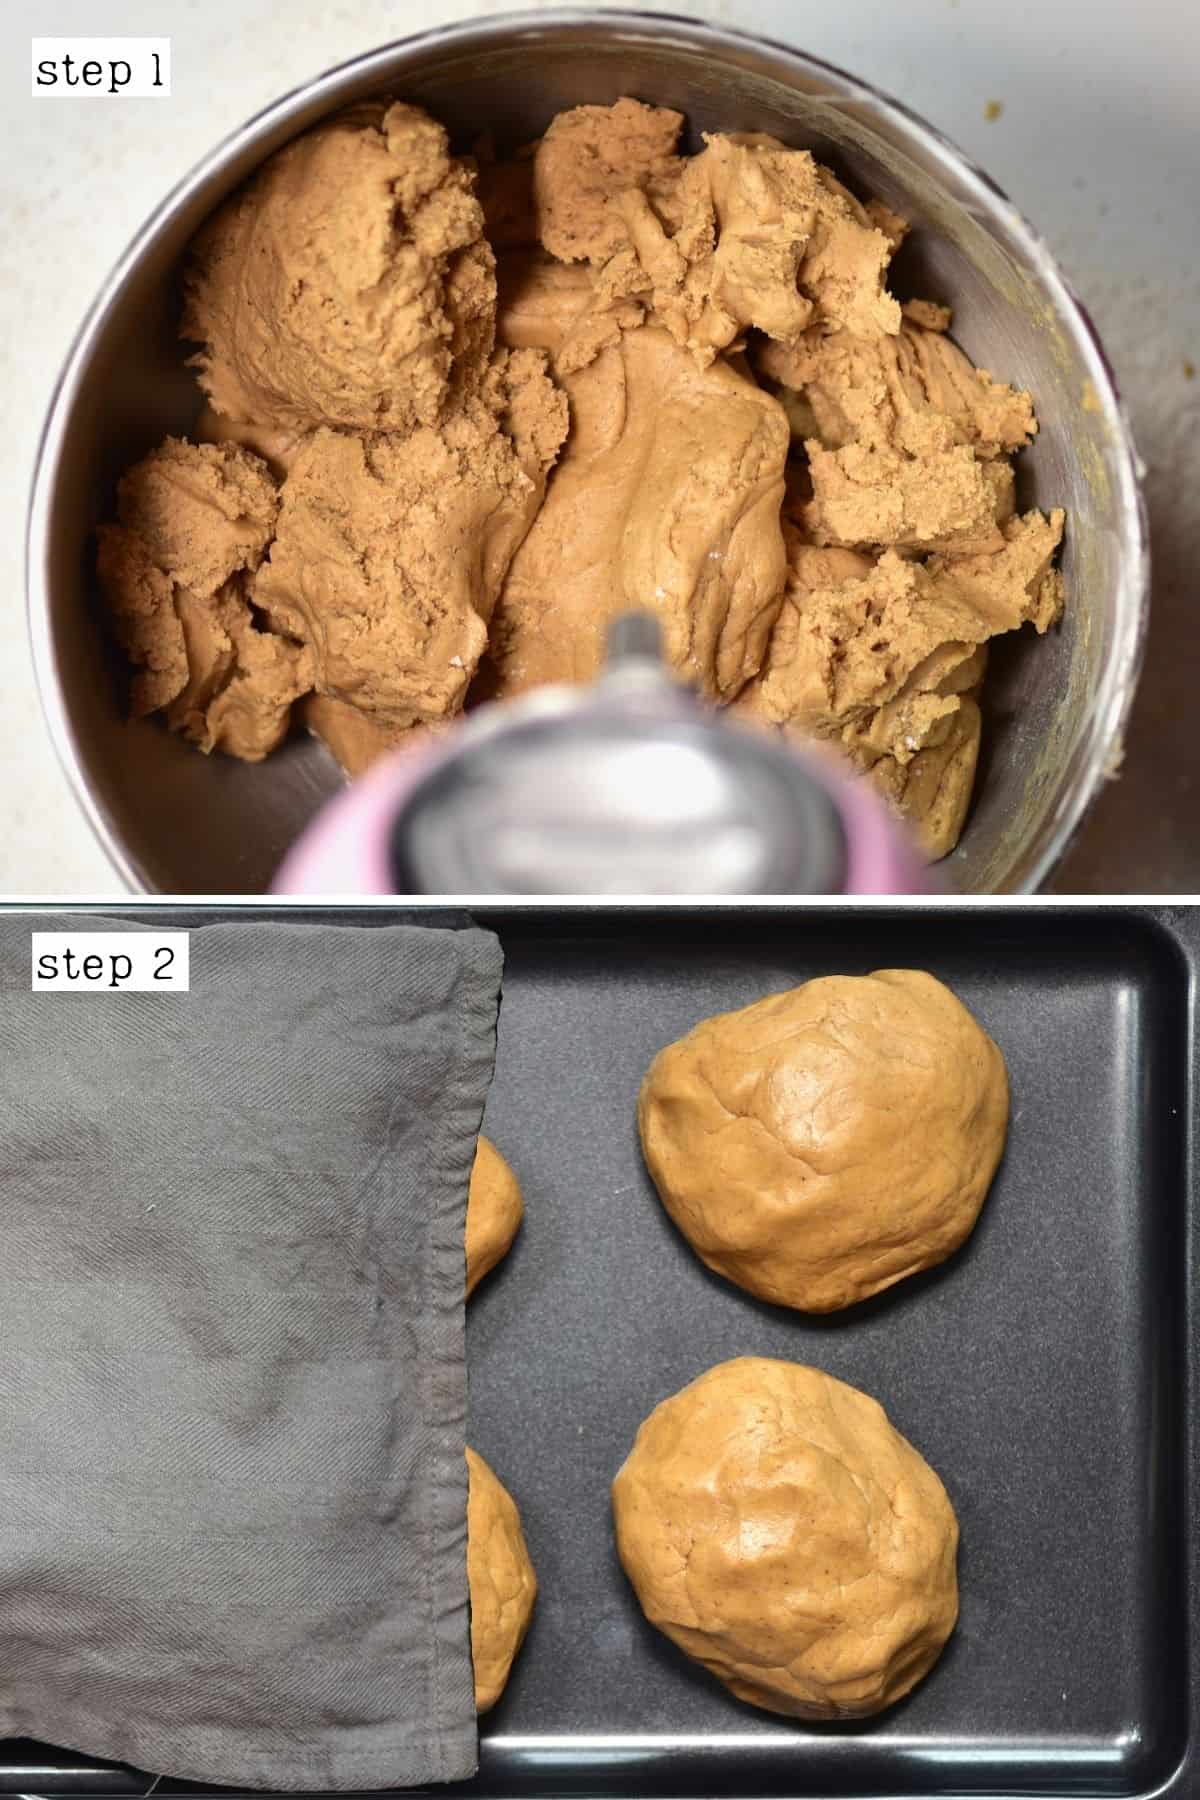 Steps for preparing dough for gingerbread house